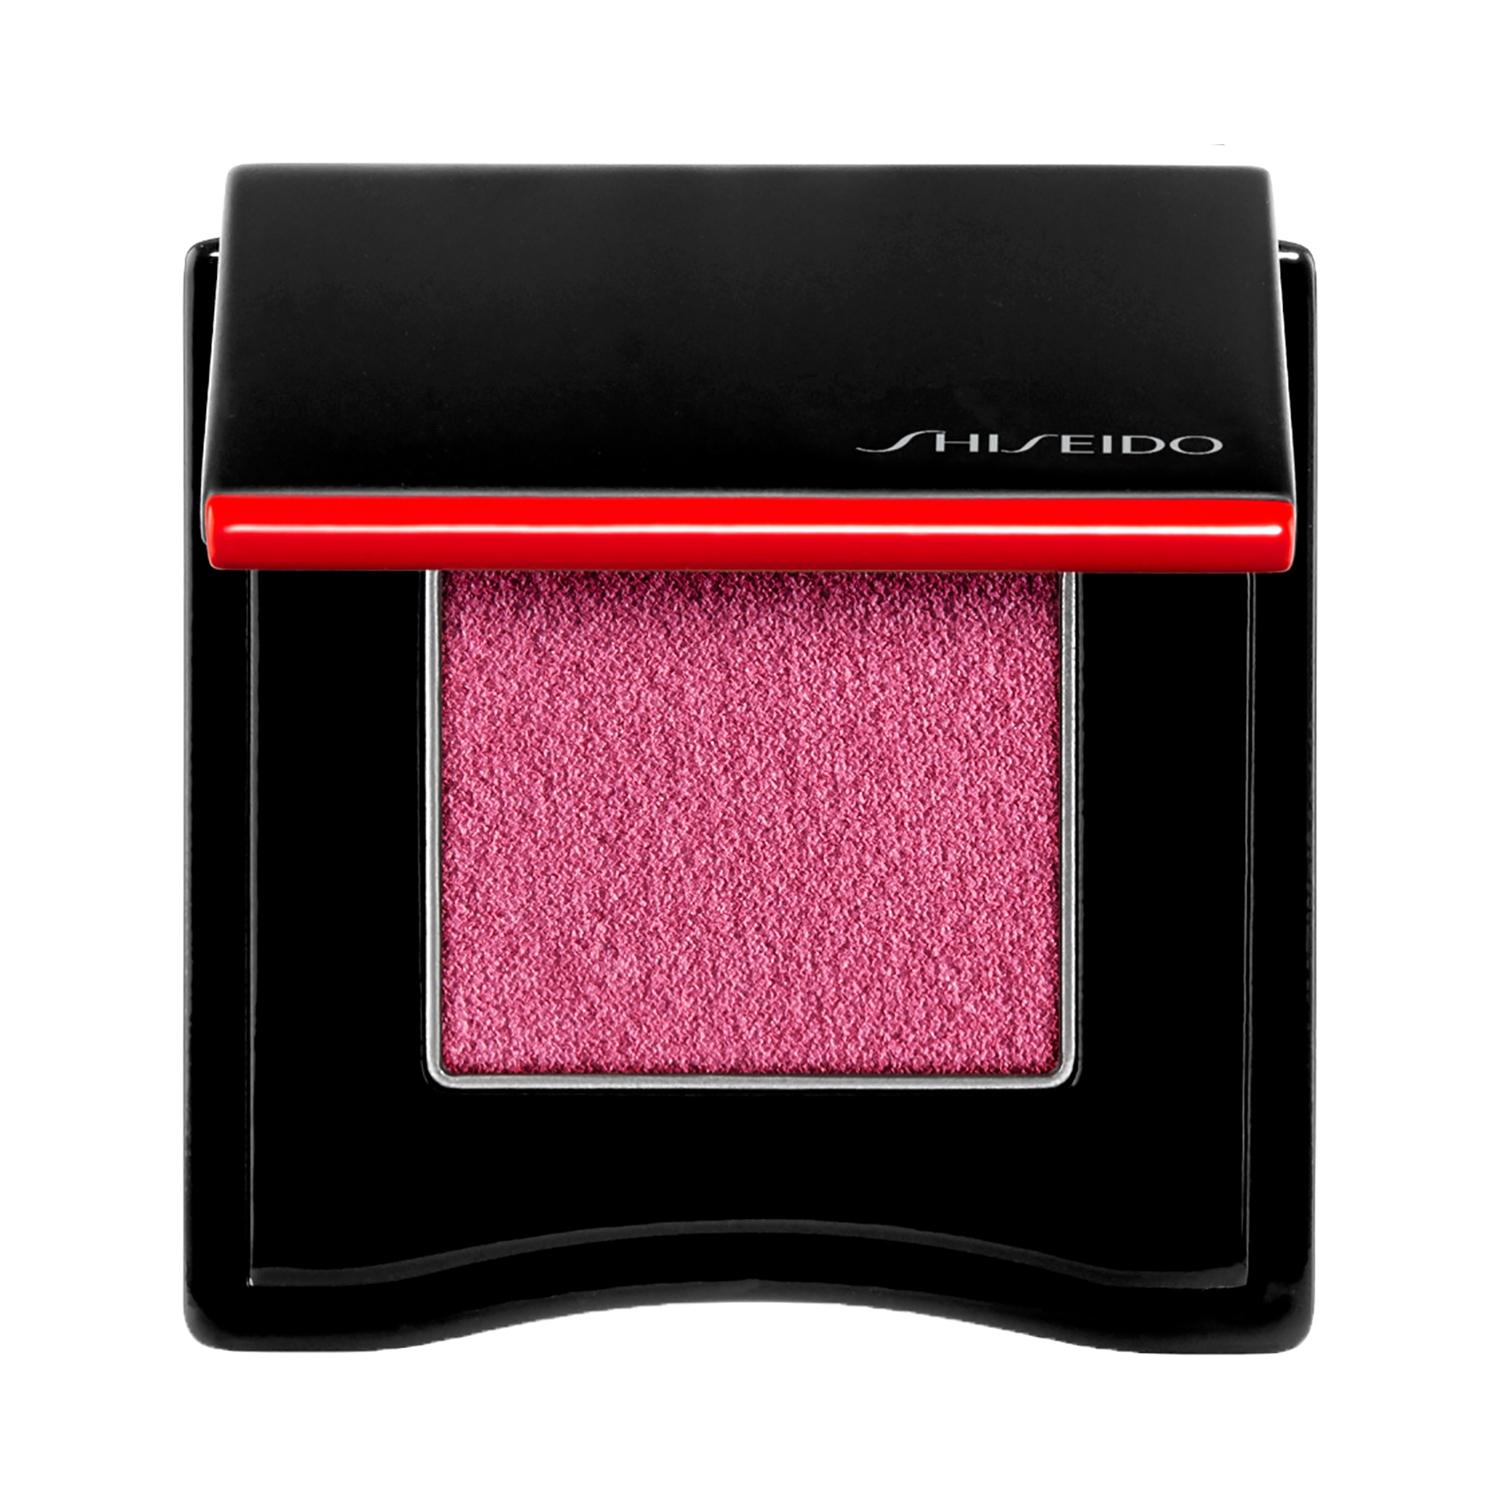 Shiseido Pop Powdergel Eye Shadow - 11 Waku Pink (2.2g)